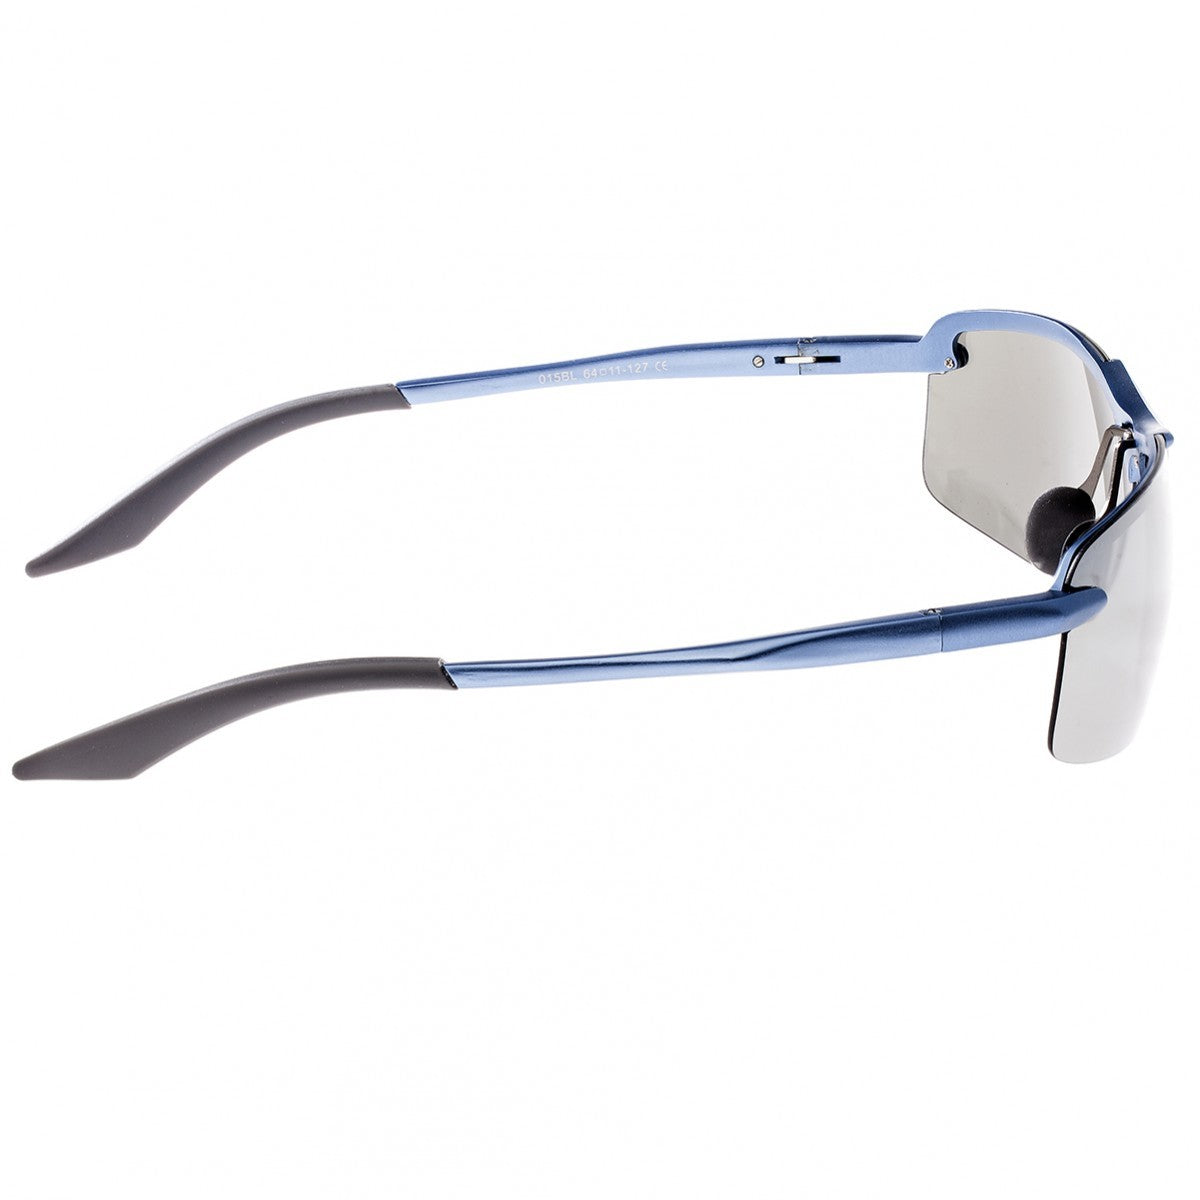 Breed Lynx Aluminium Polarized Sunglasses - Blue/Silver - BSG015BL